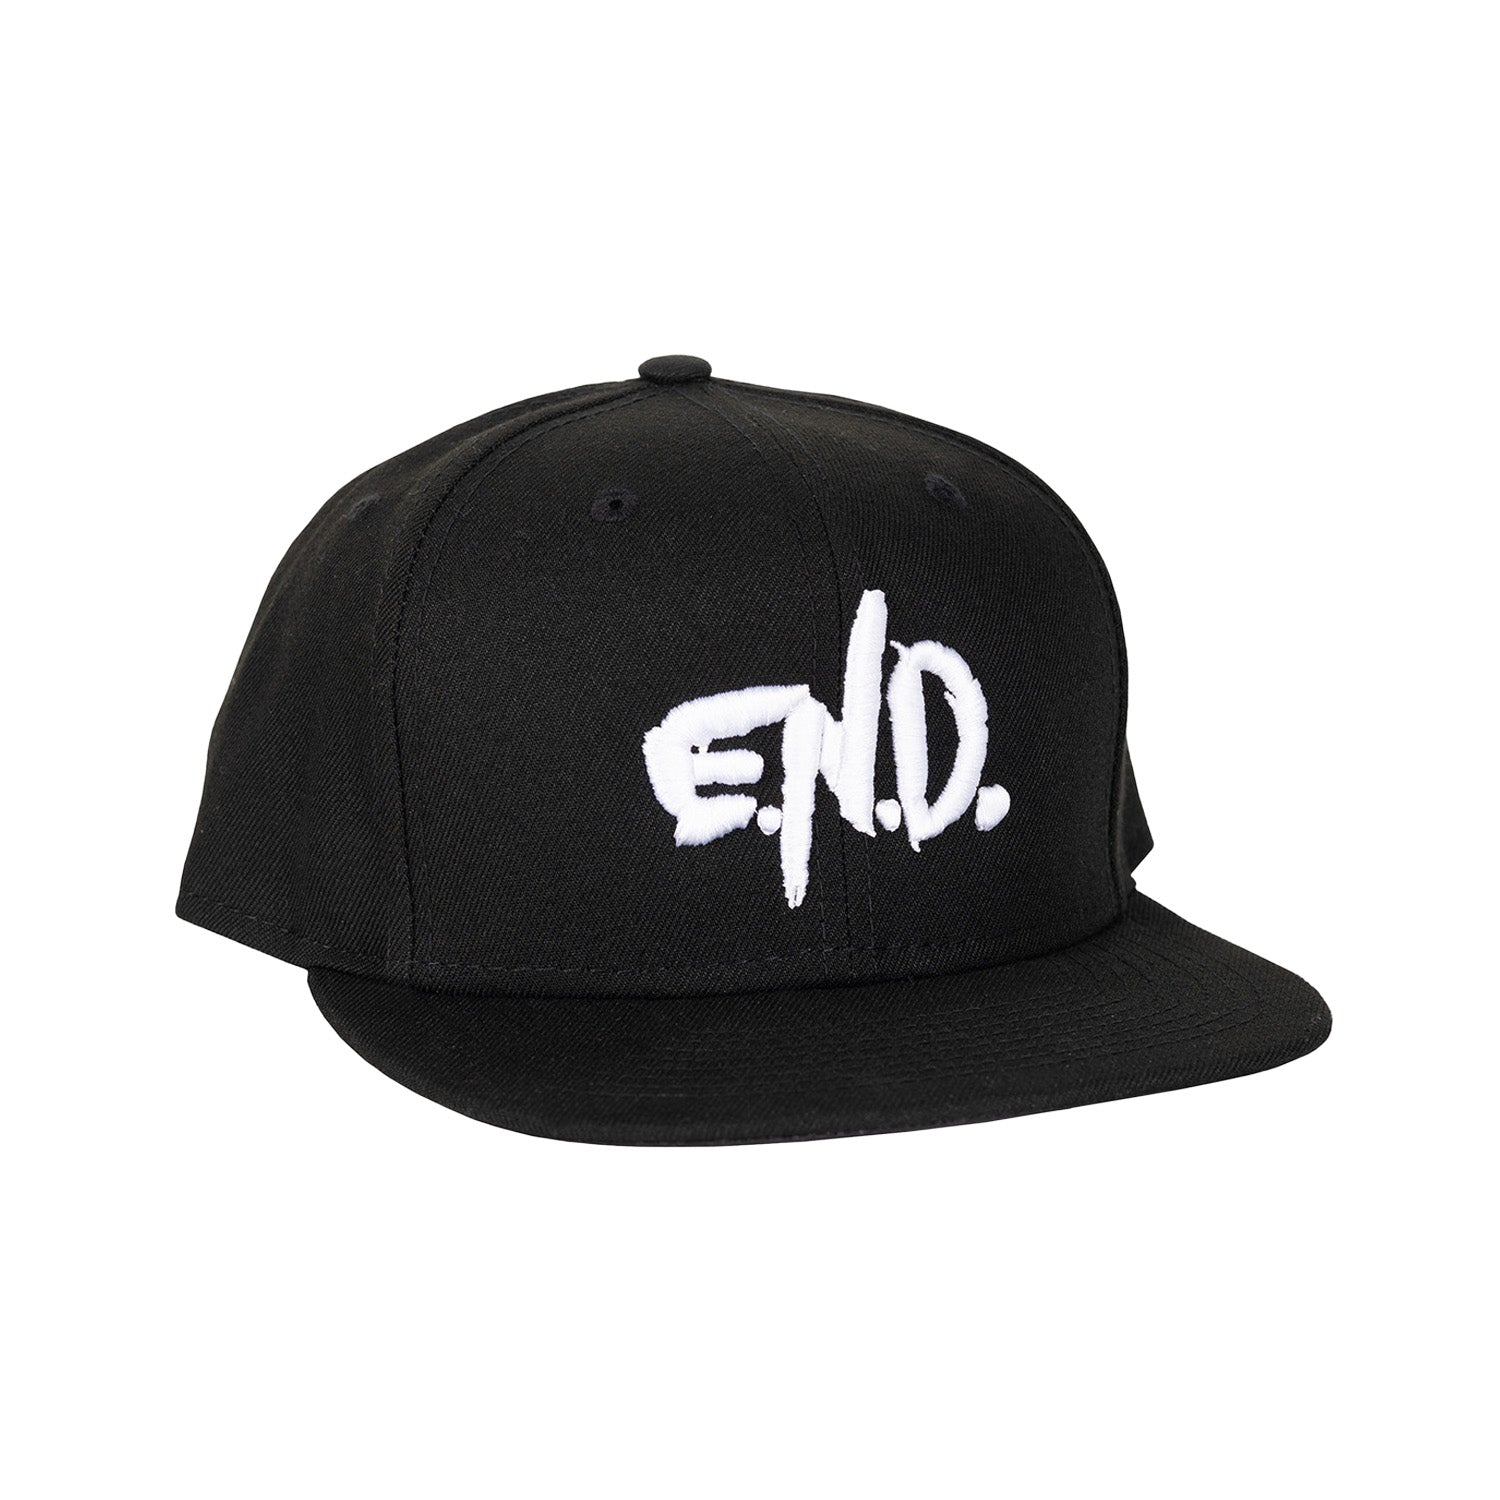 Emo’s Not Dead, Band Merch, END Snapback, hat, new era 